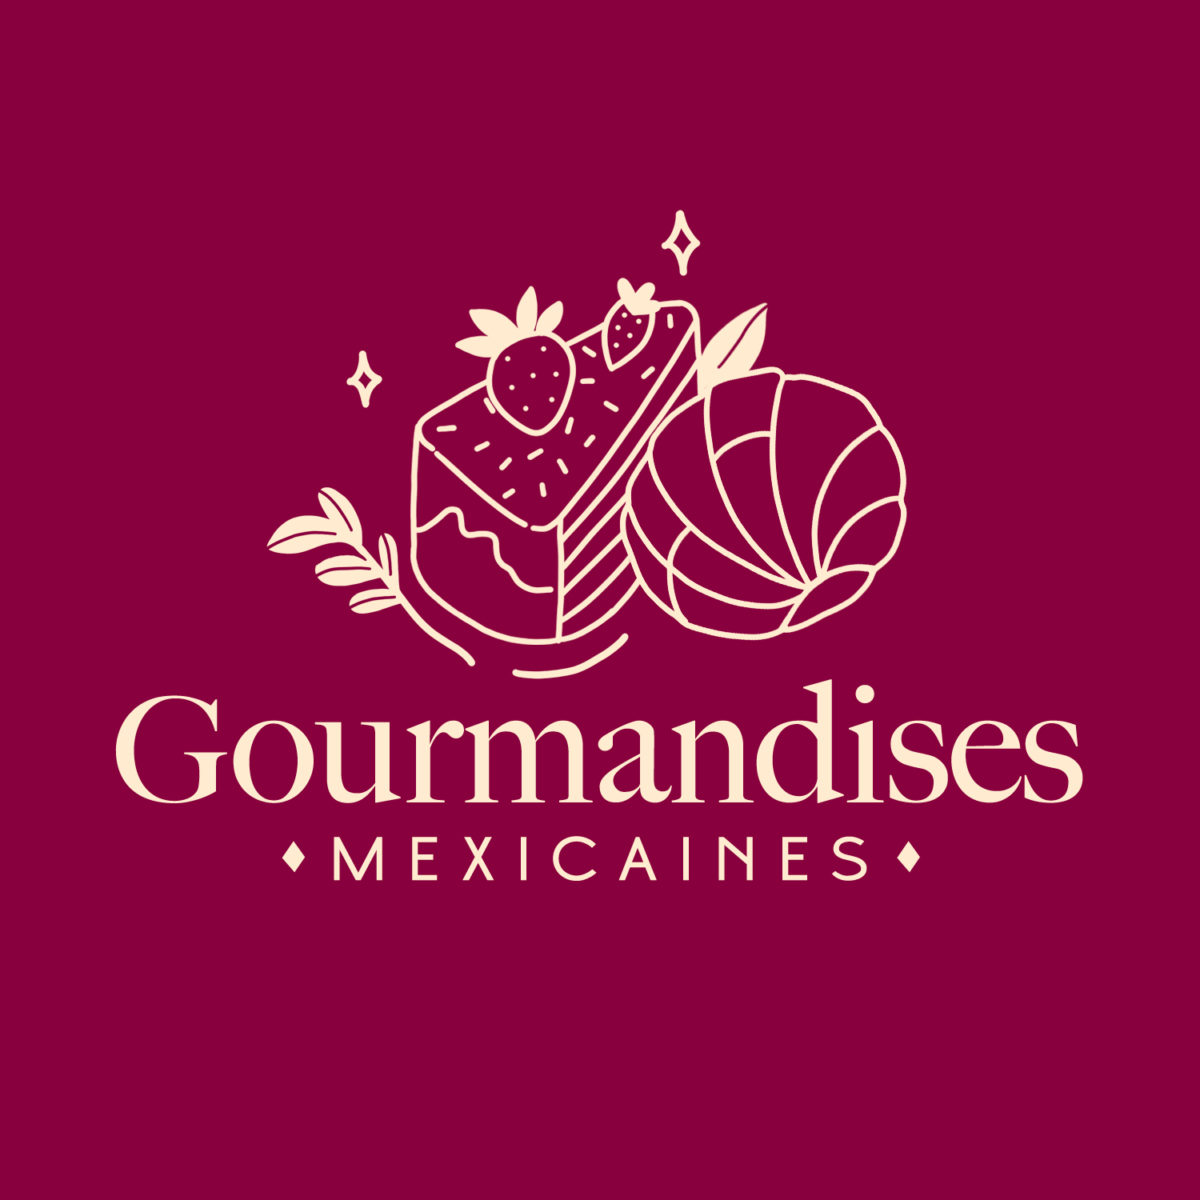 Gourmandises mexicaines